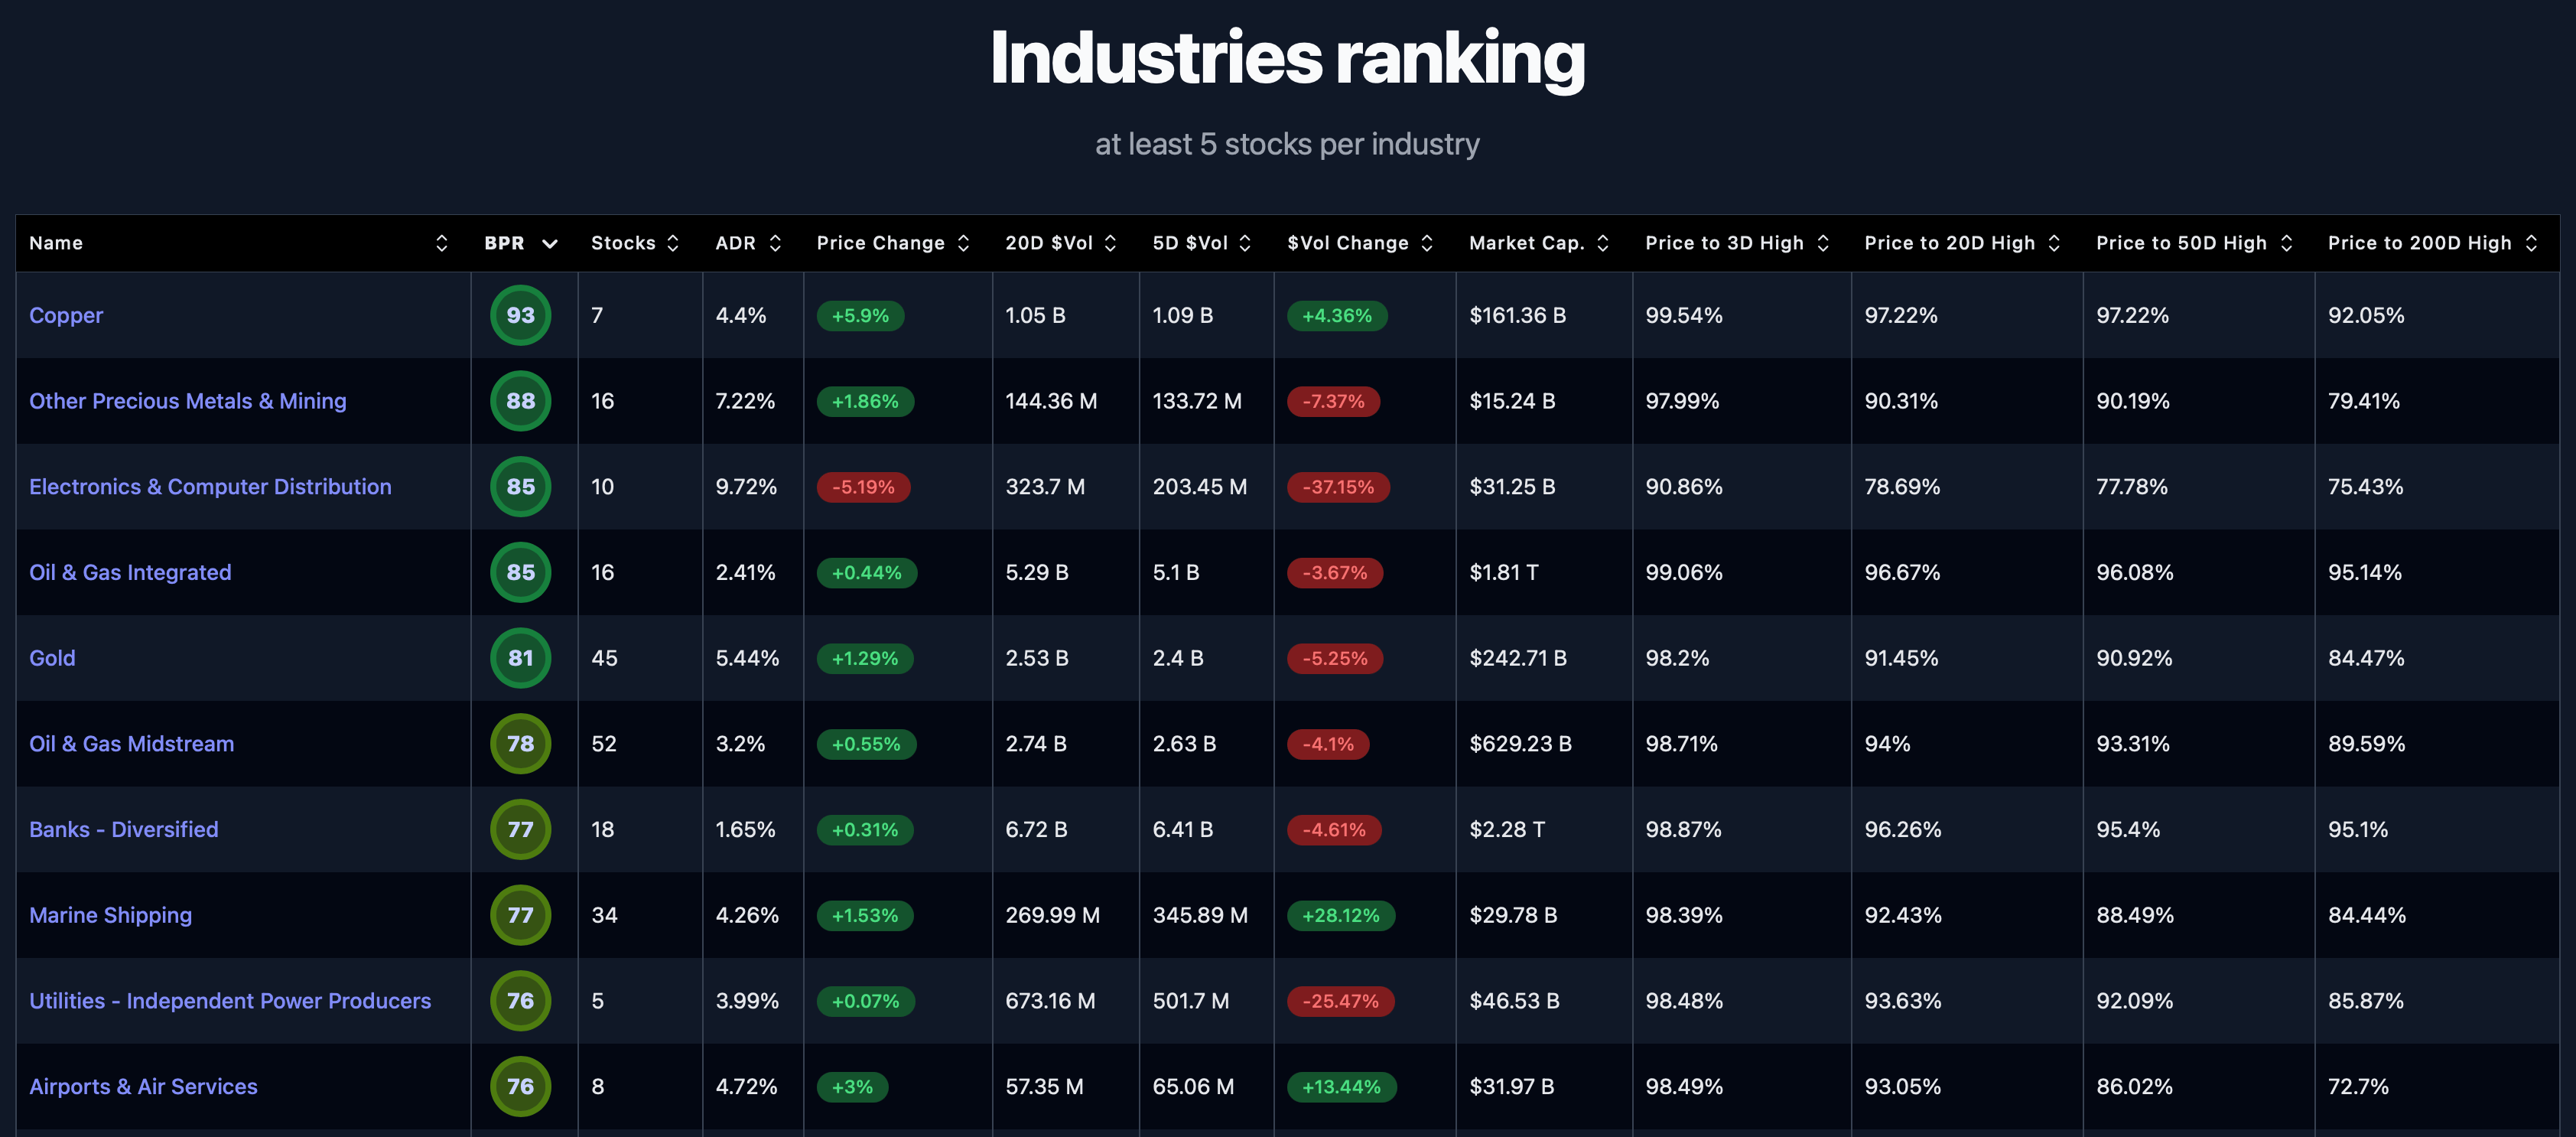 Industries ranking